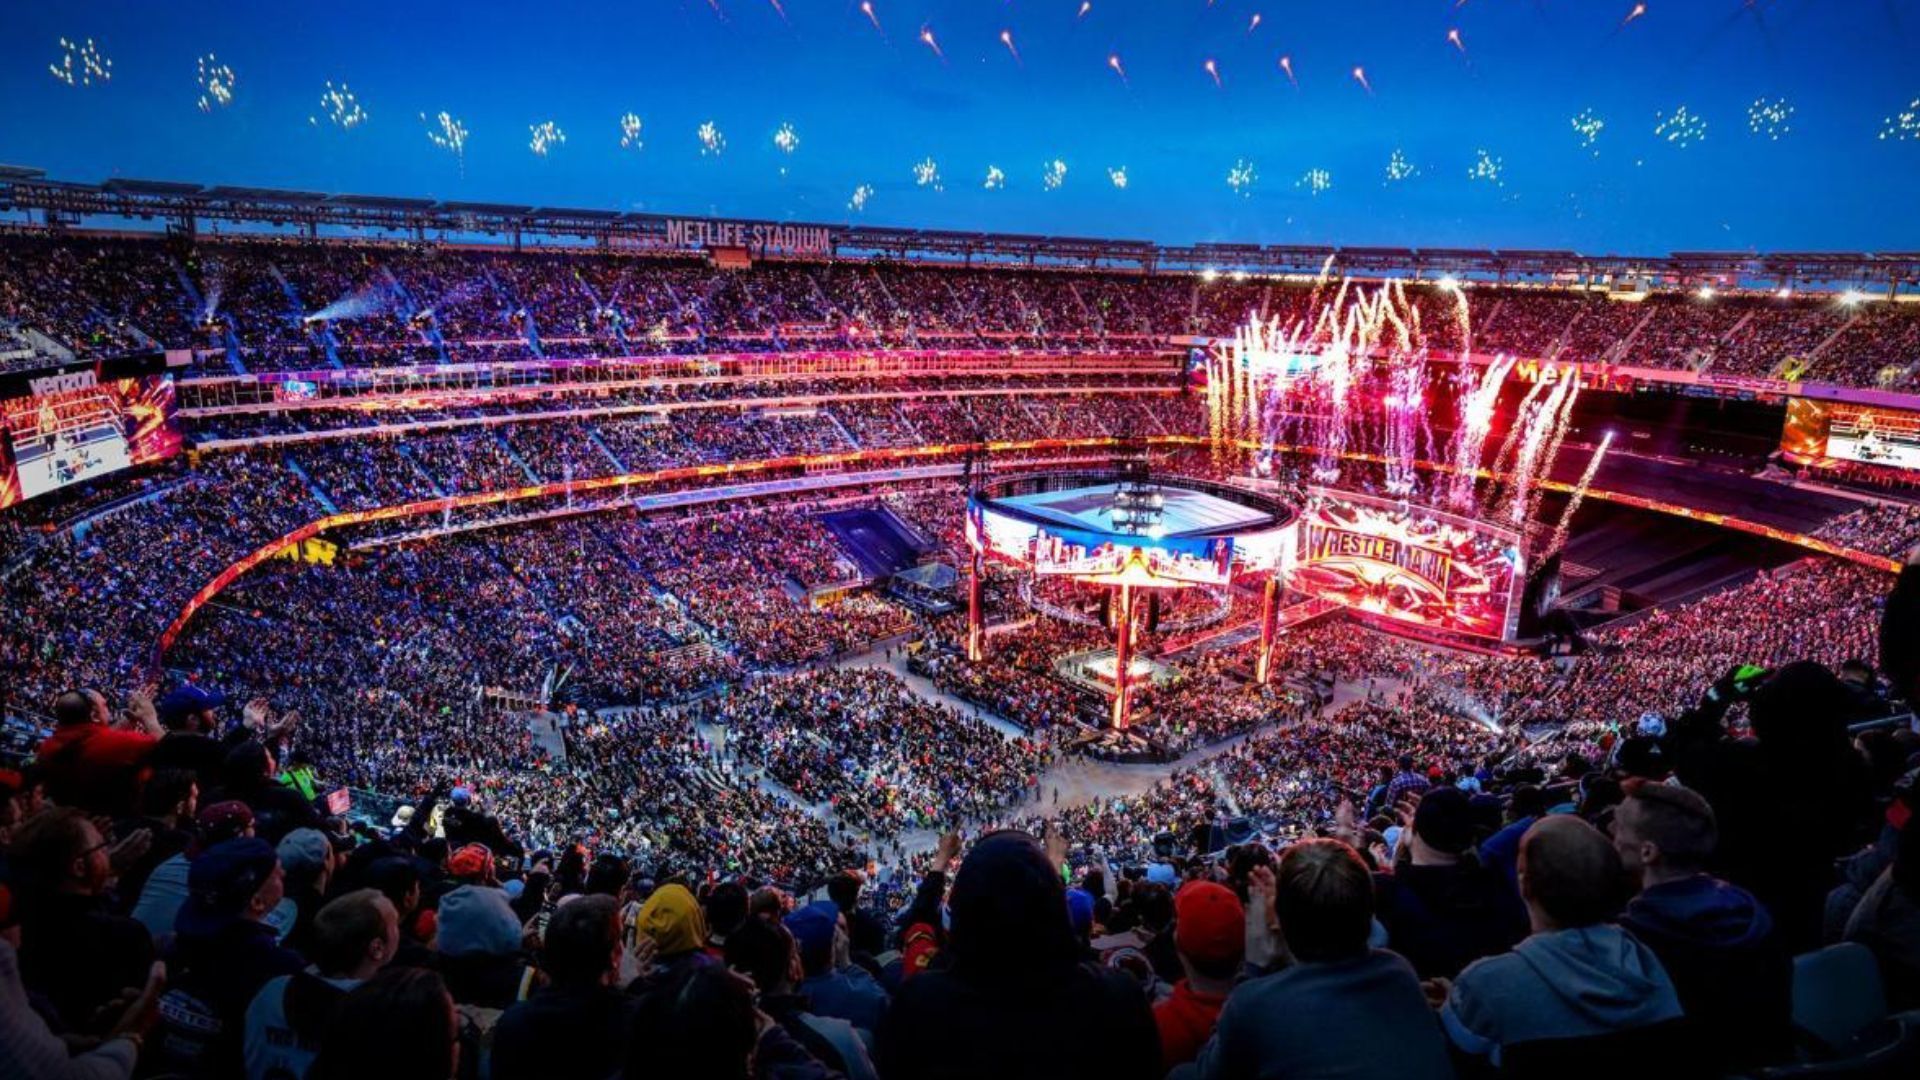 WWE WrestleMania Arena Image. Credits: X 